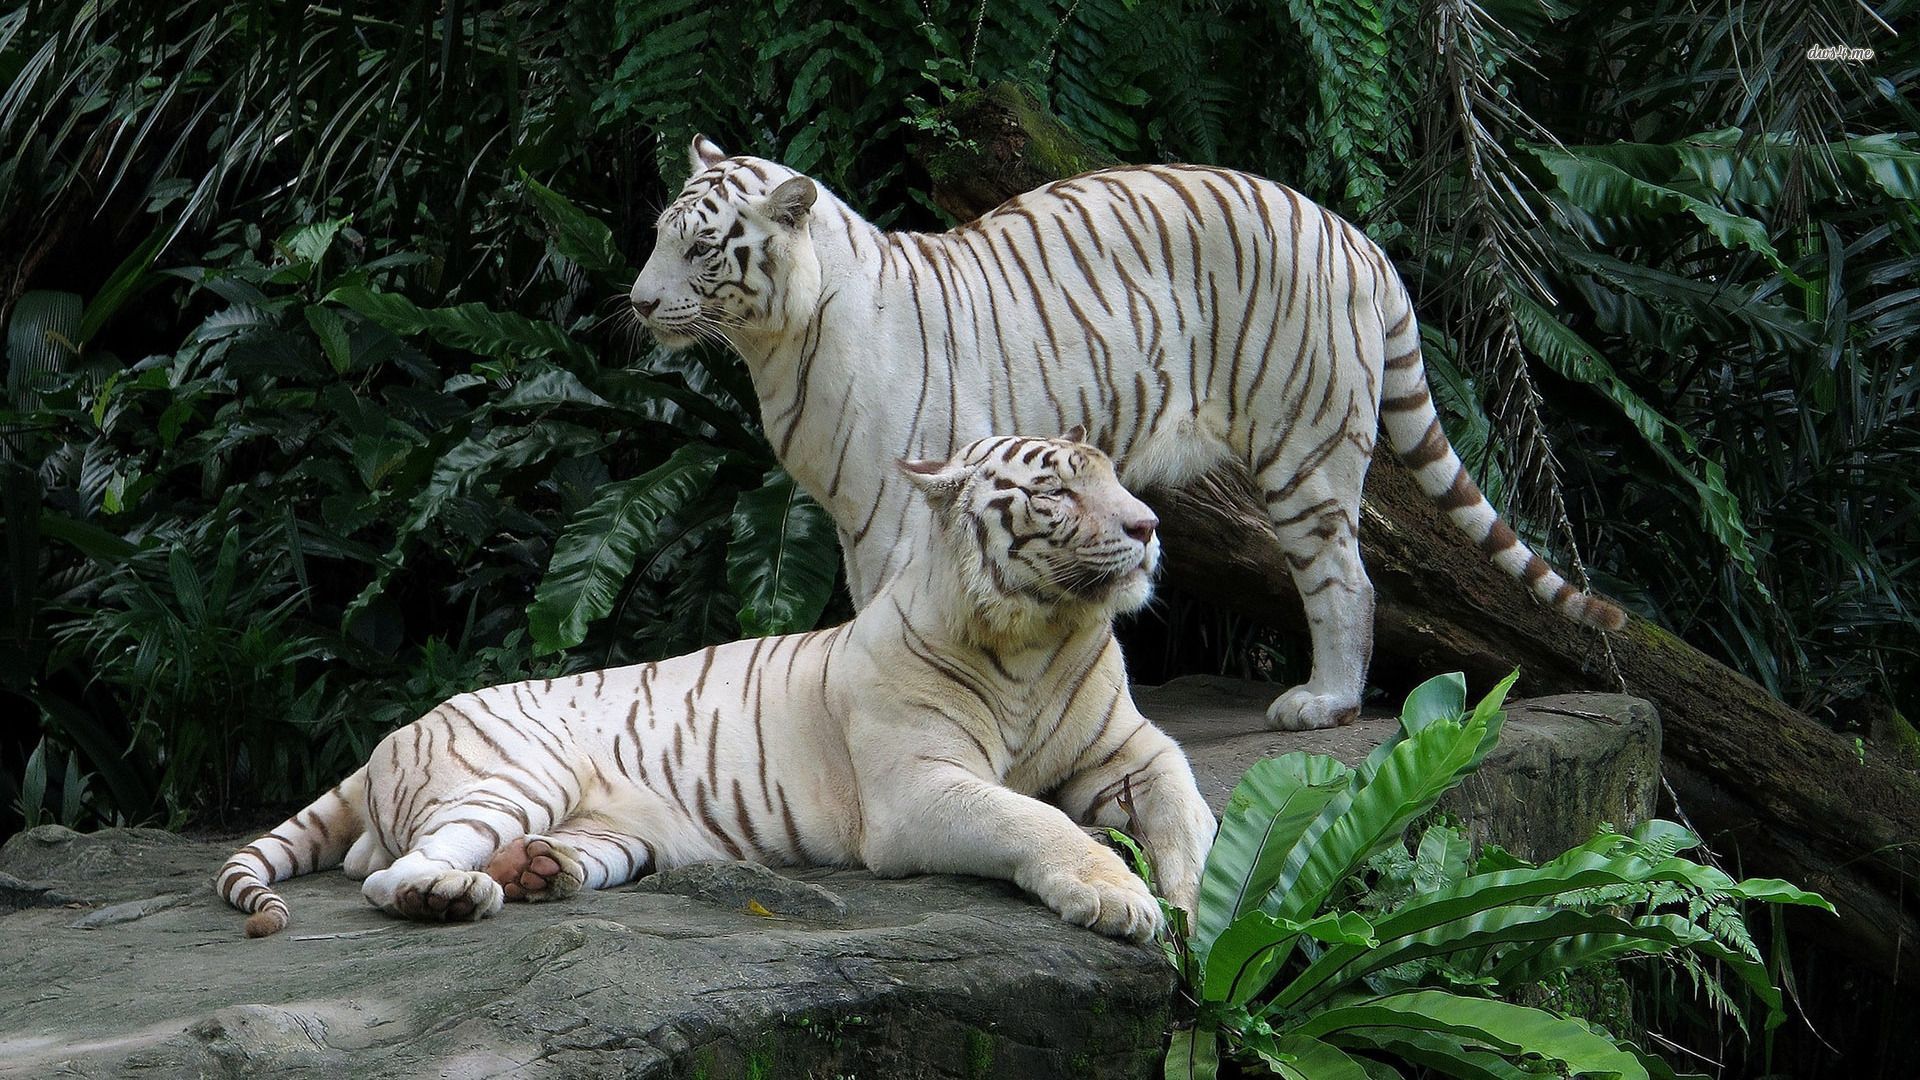 White tigers wallpaper - Animal wallpapers - #32225